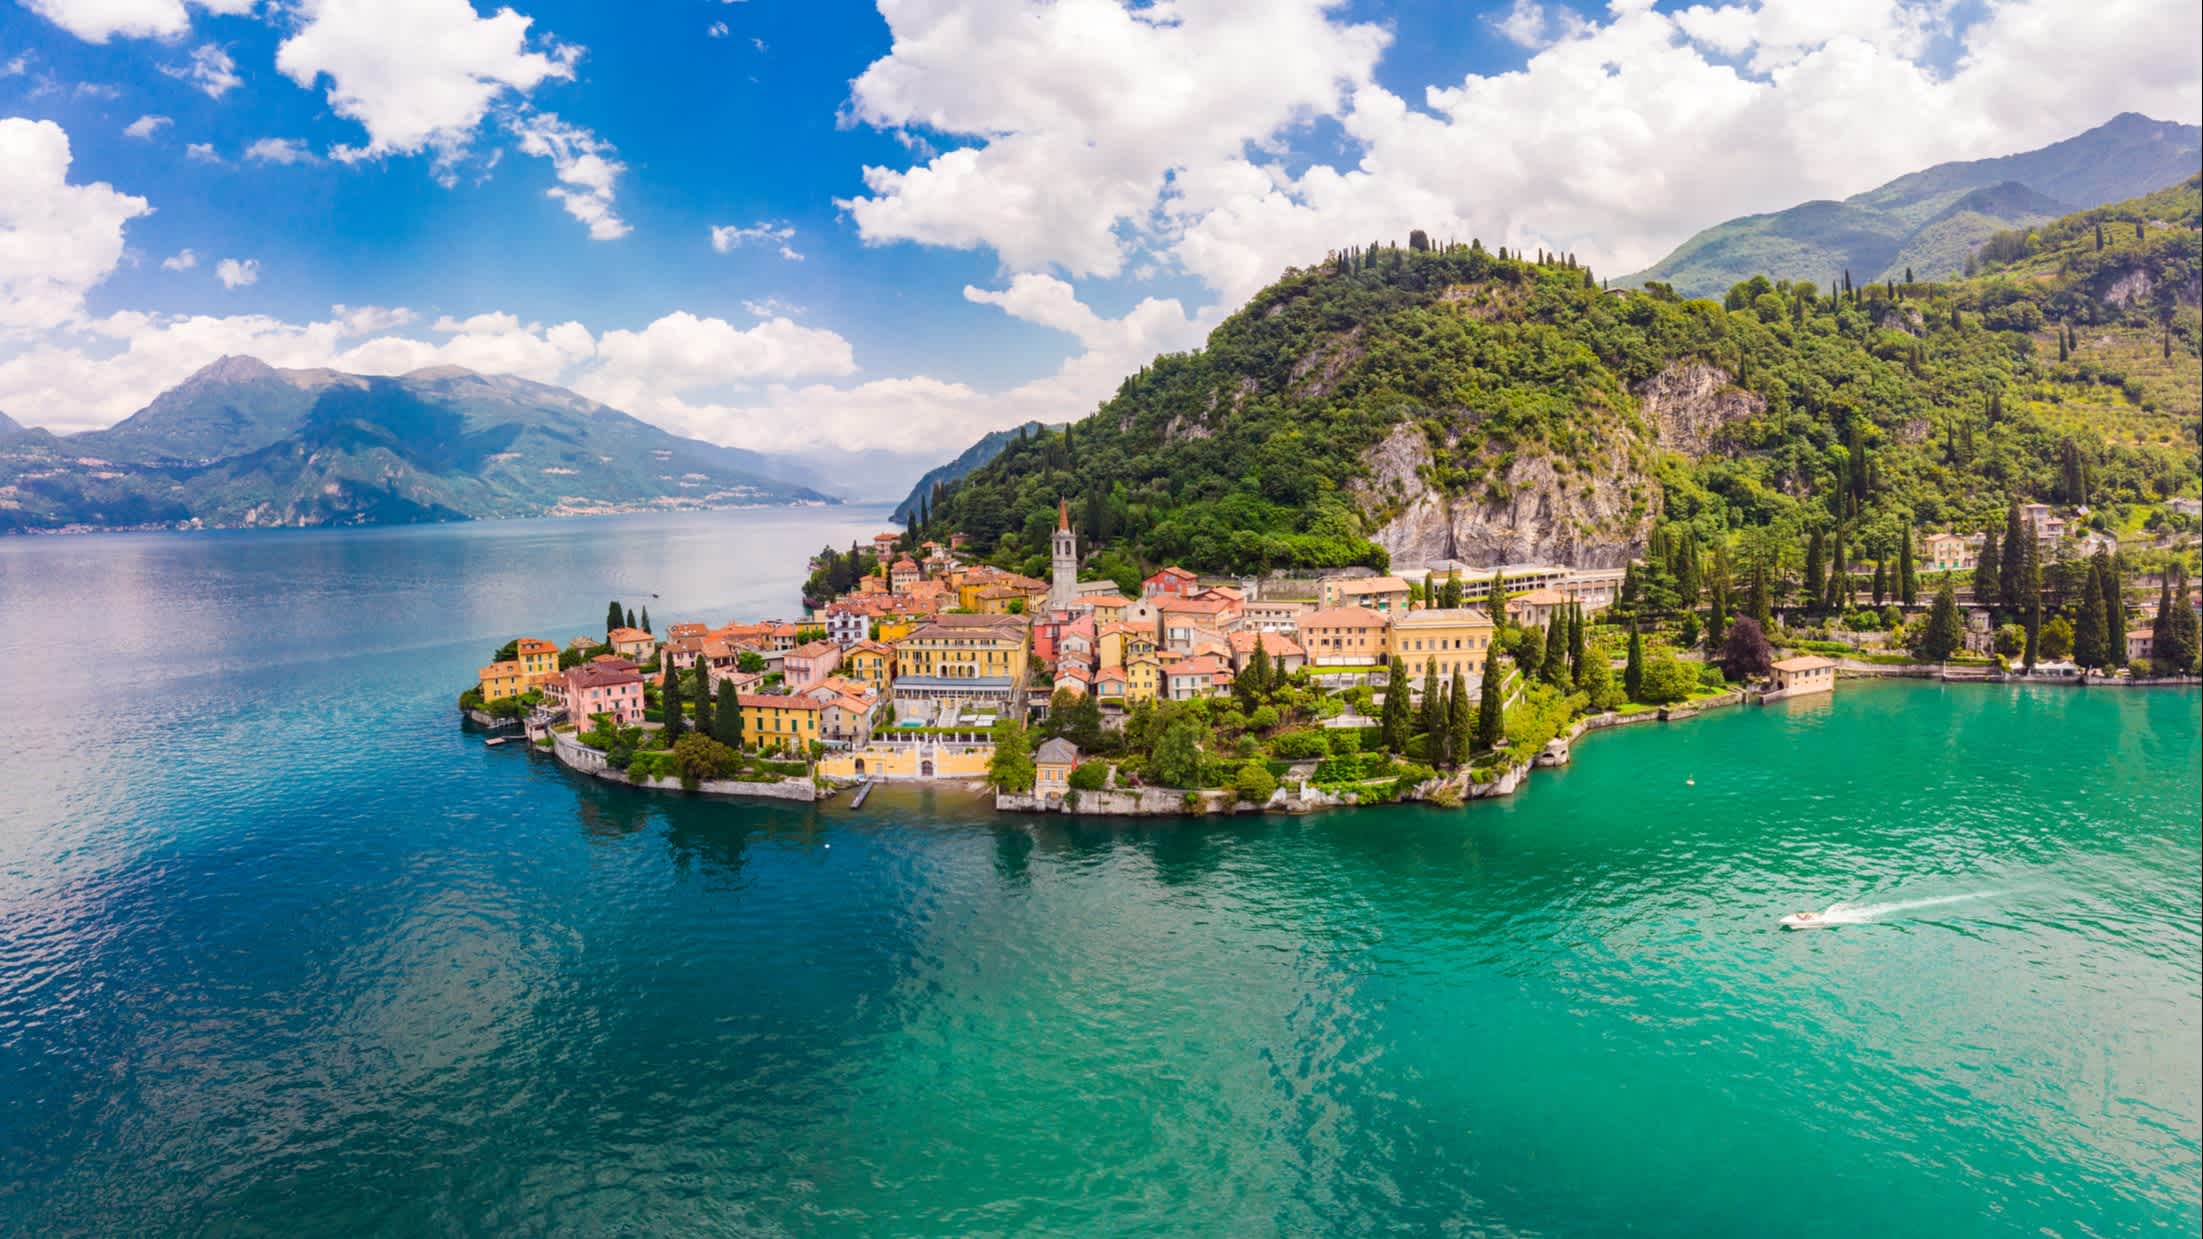 Vue a érienne de Varenna sur les rives du lac de Côme, en Lombardie, en Italie.
